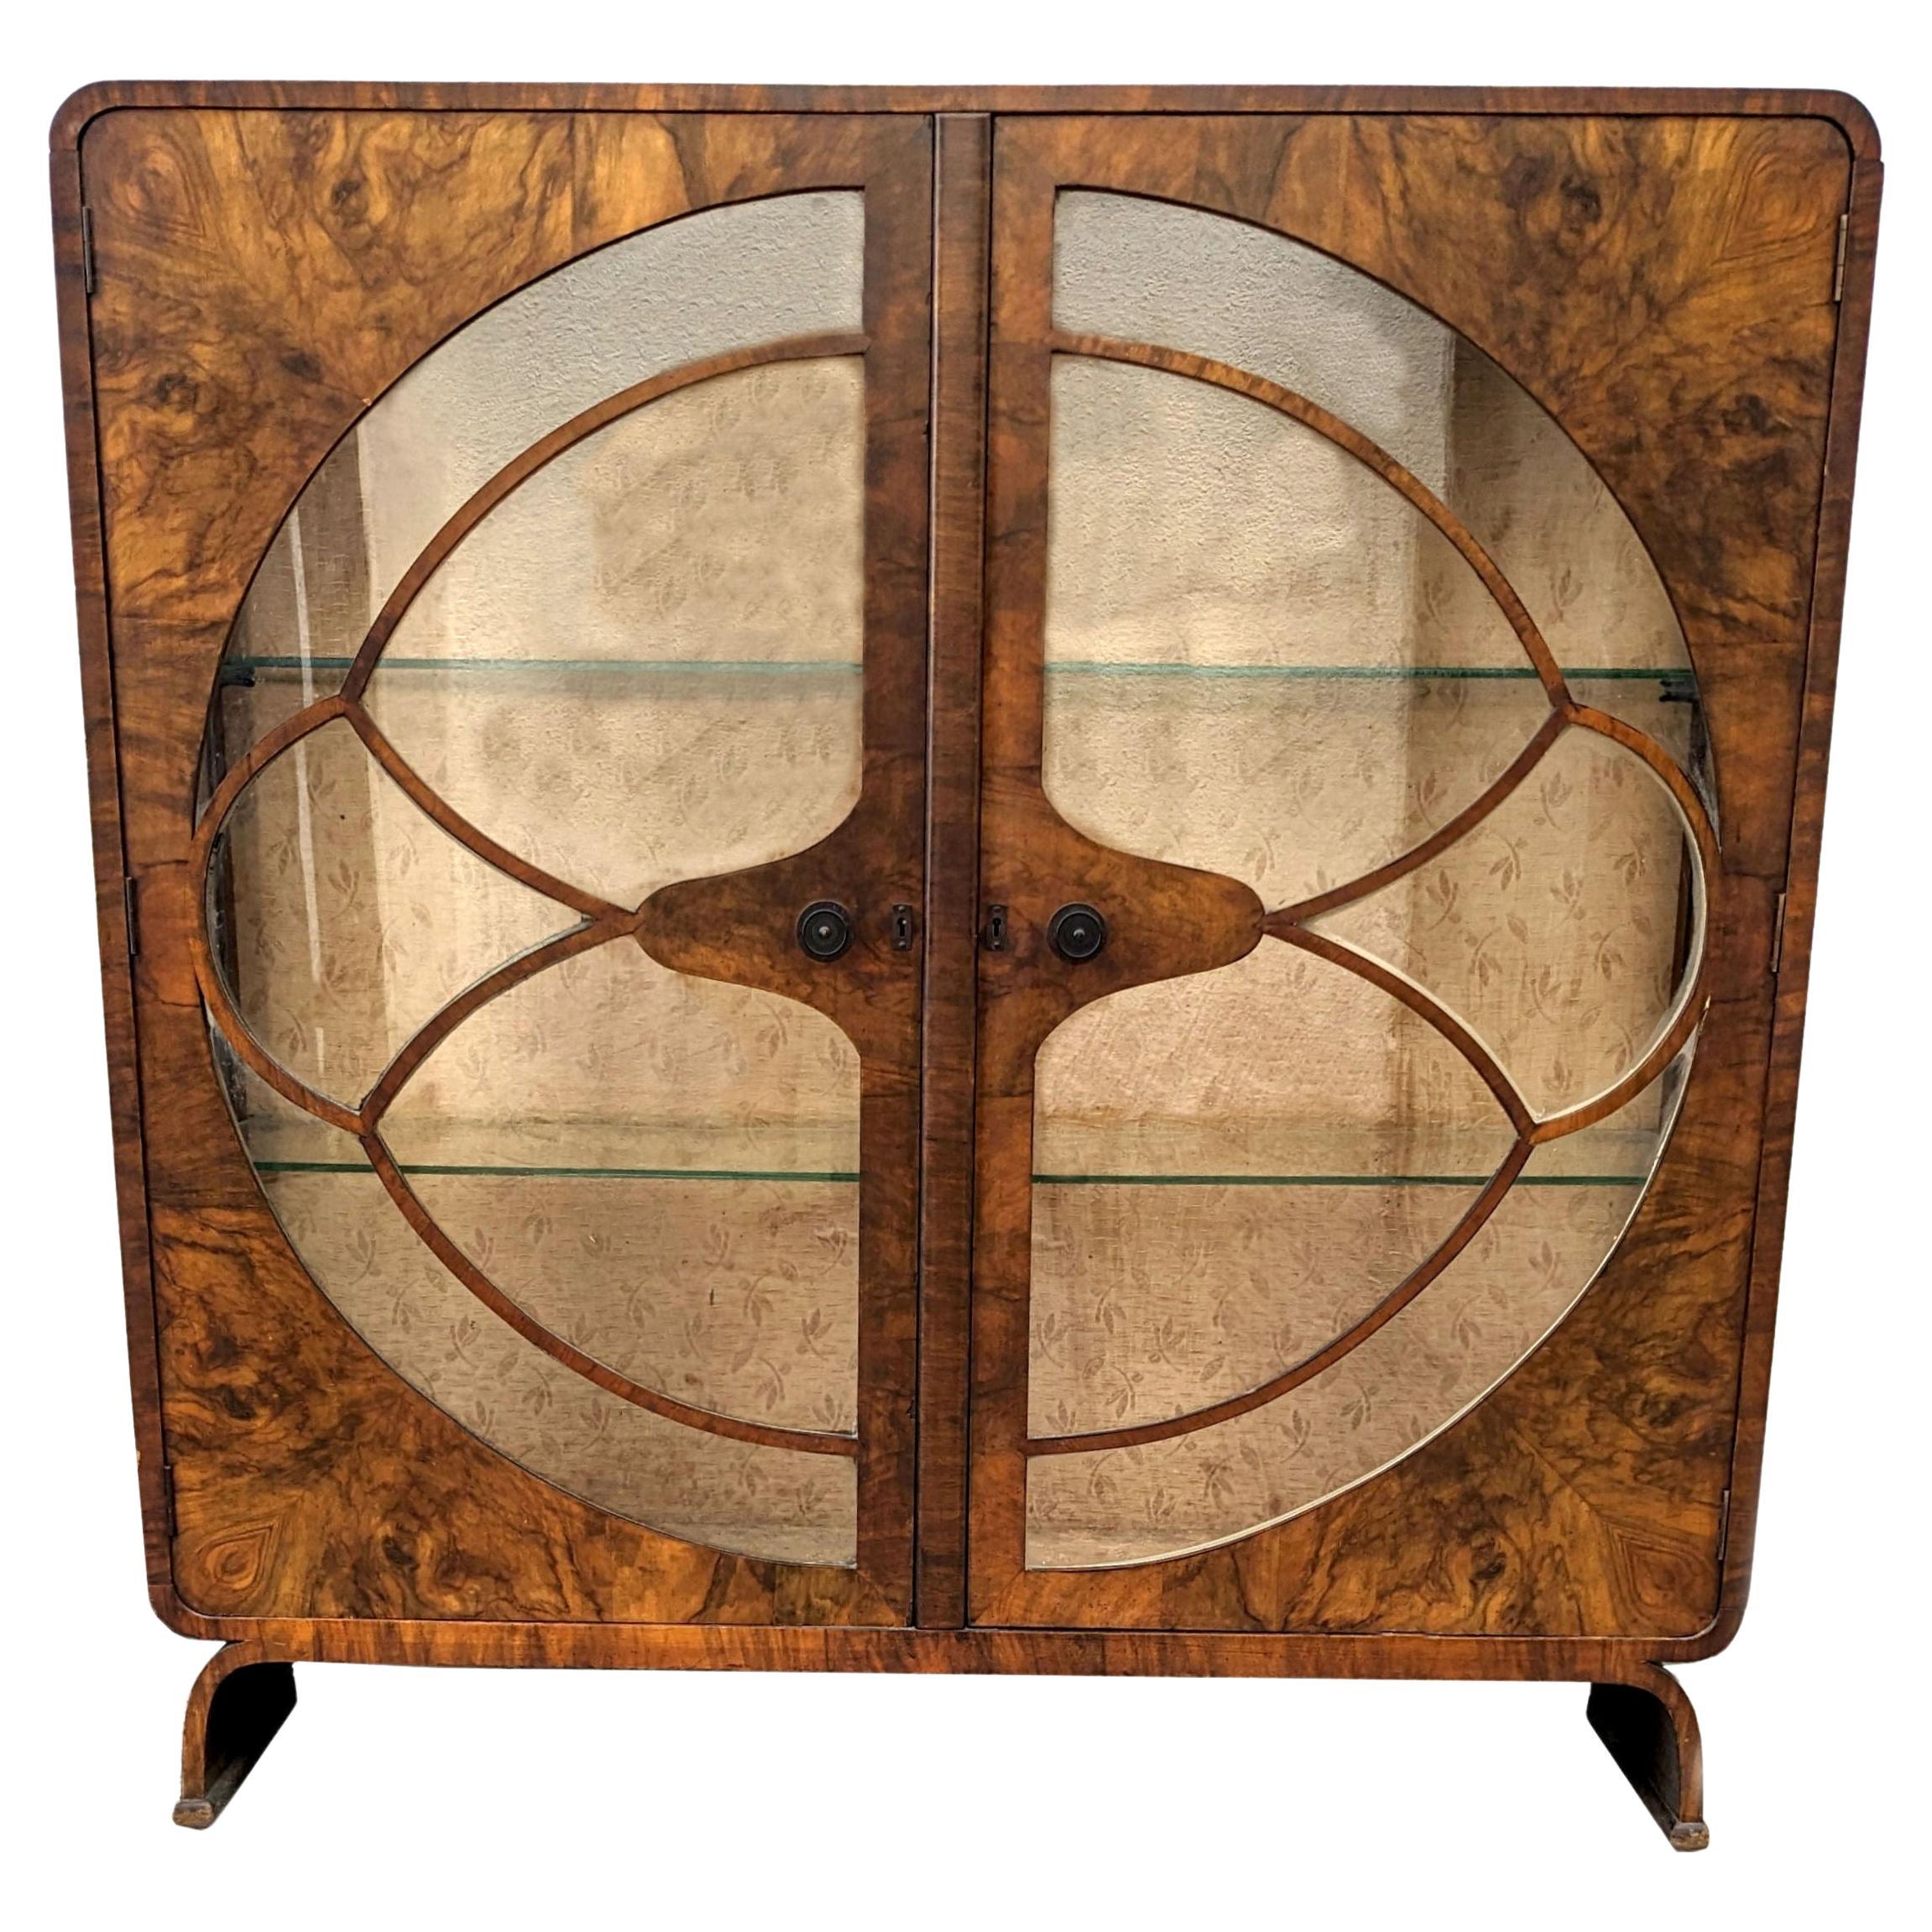 Art Deco Figured Walnut Display Cabinet, English, c1930